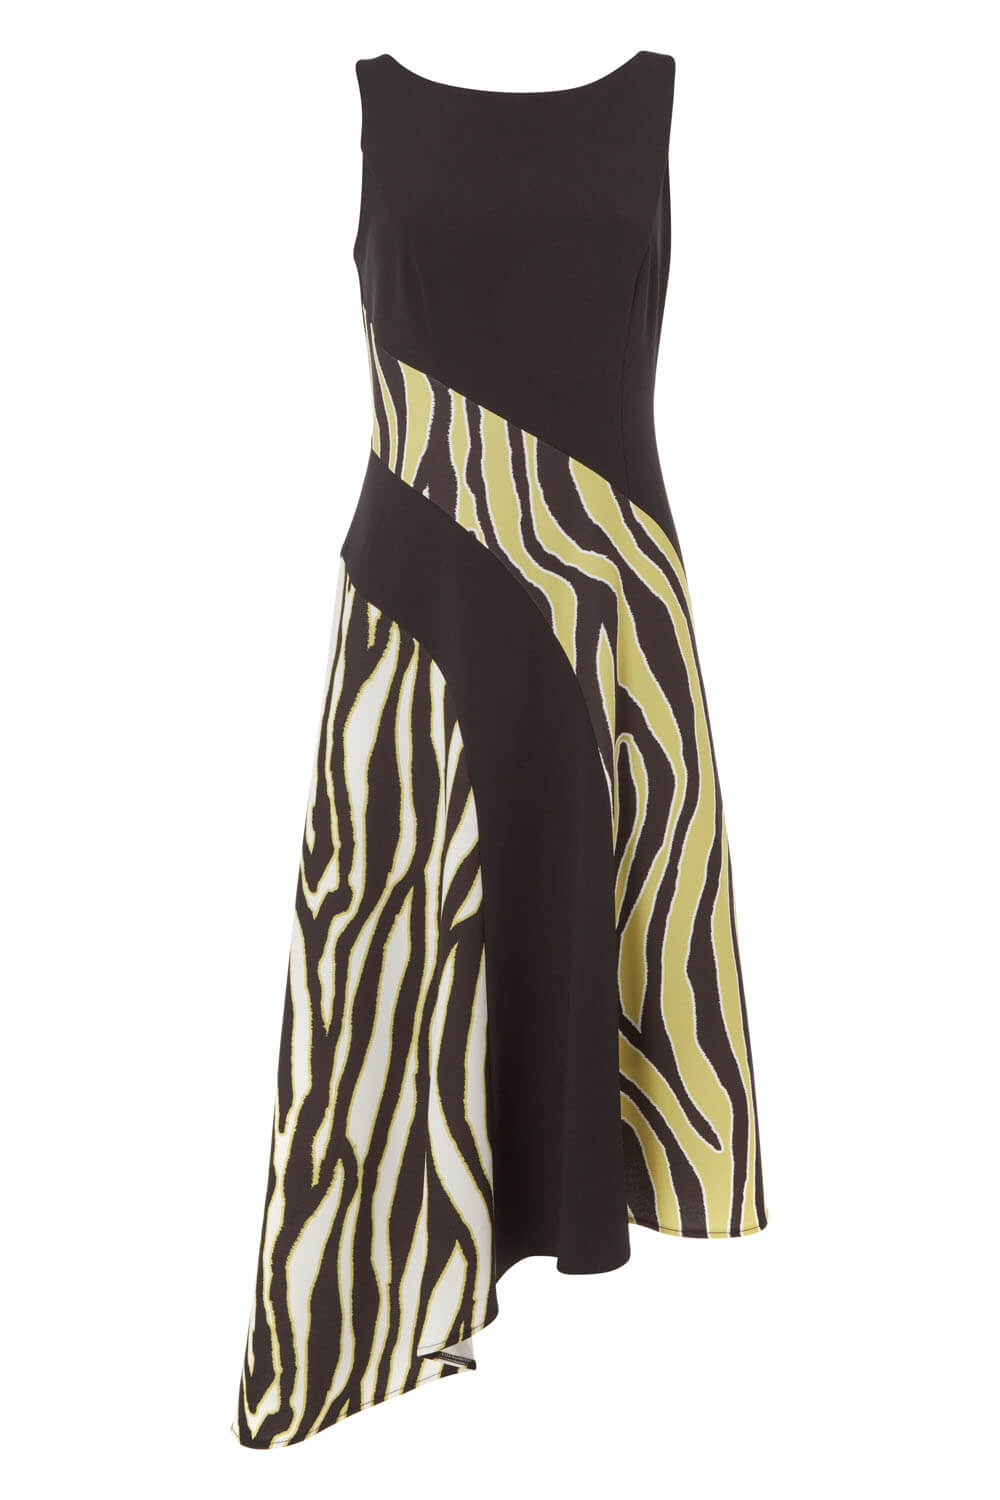 Black Zebra Print Block Asymmetric Dress, Image 4 of 4